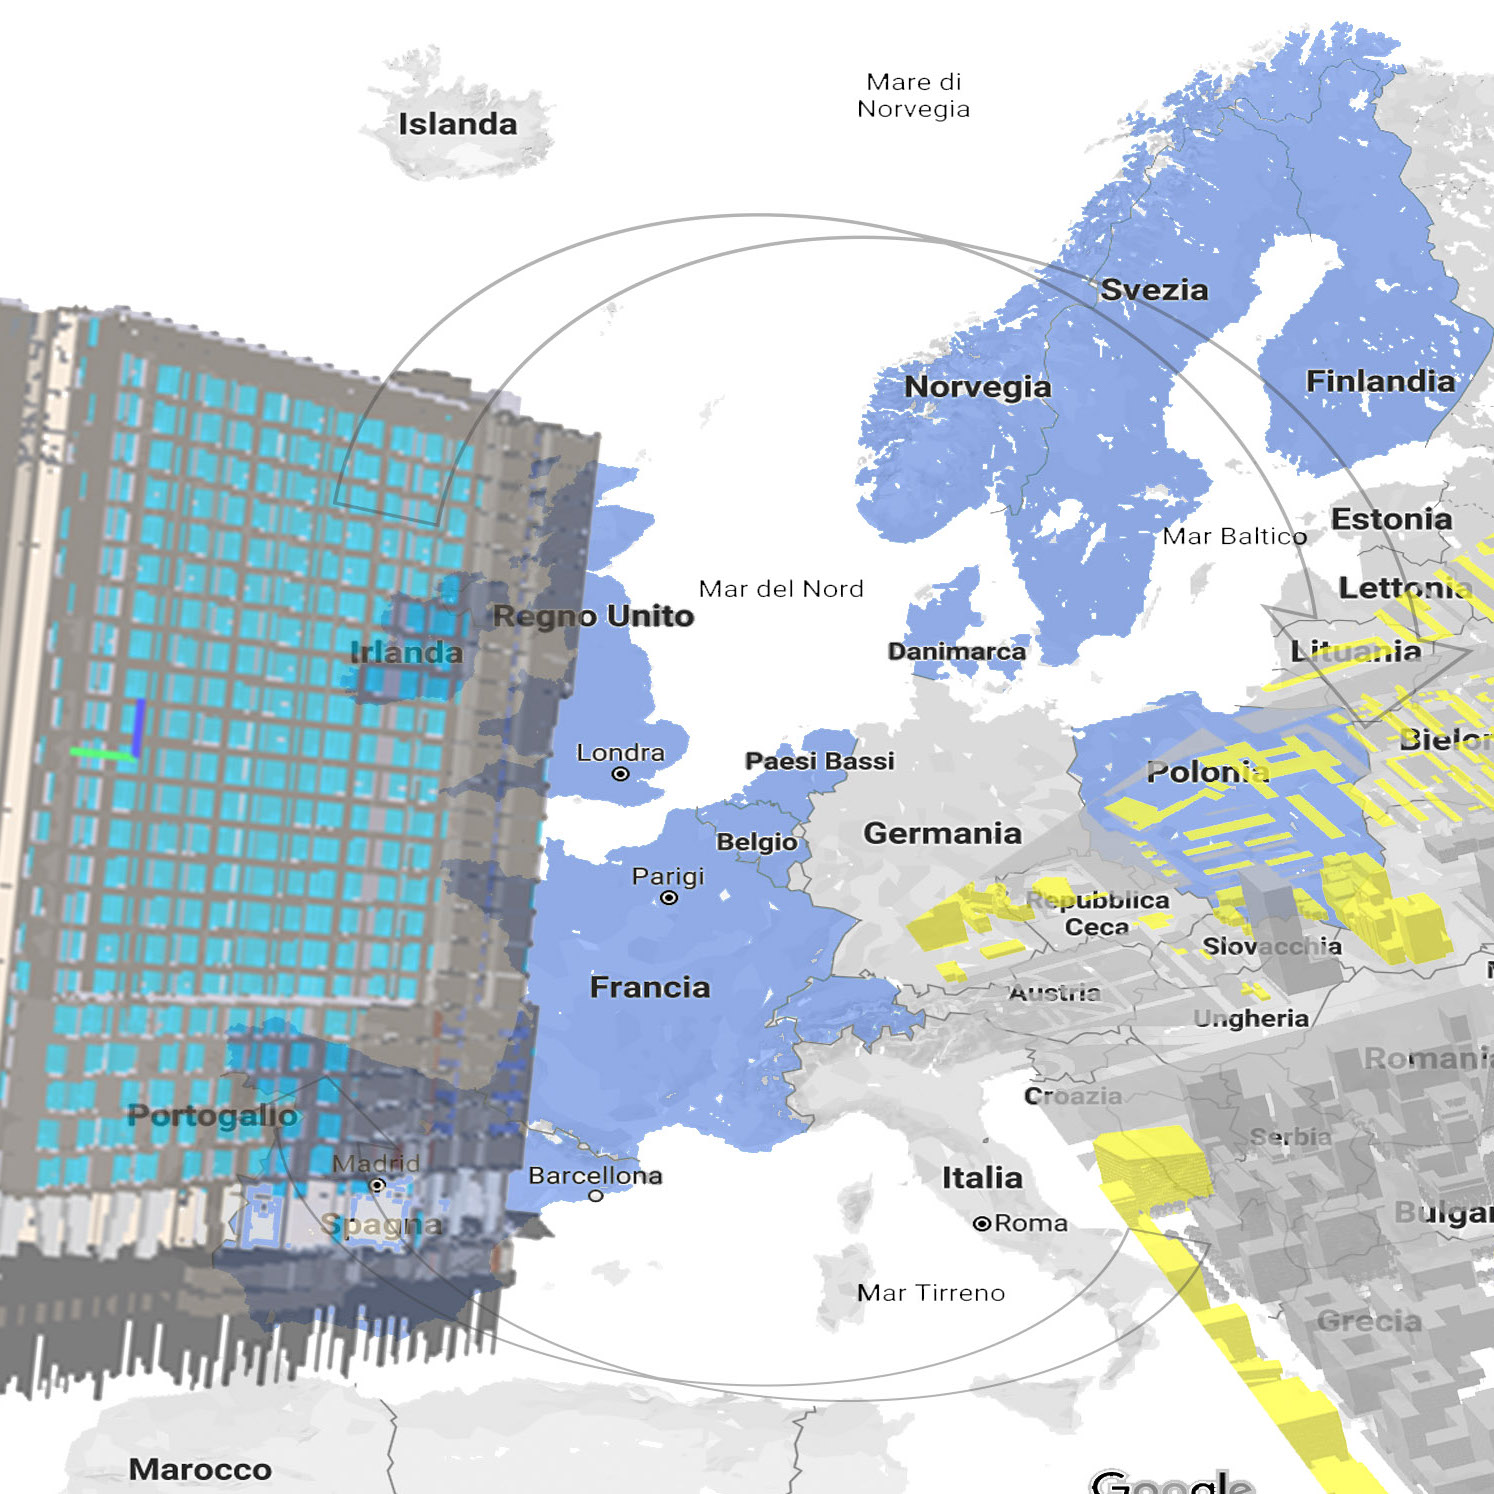 EuroSDR GeoBIM project